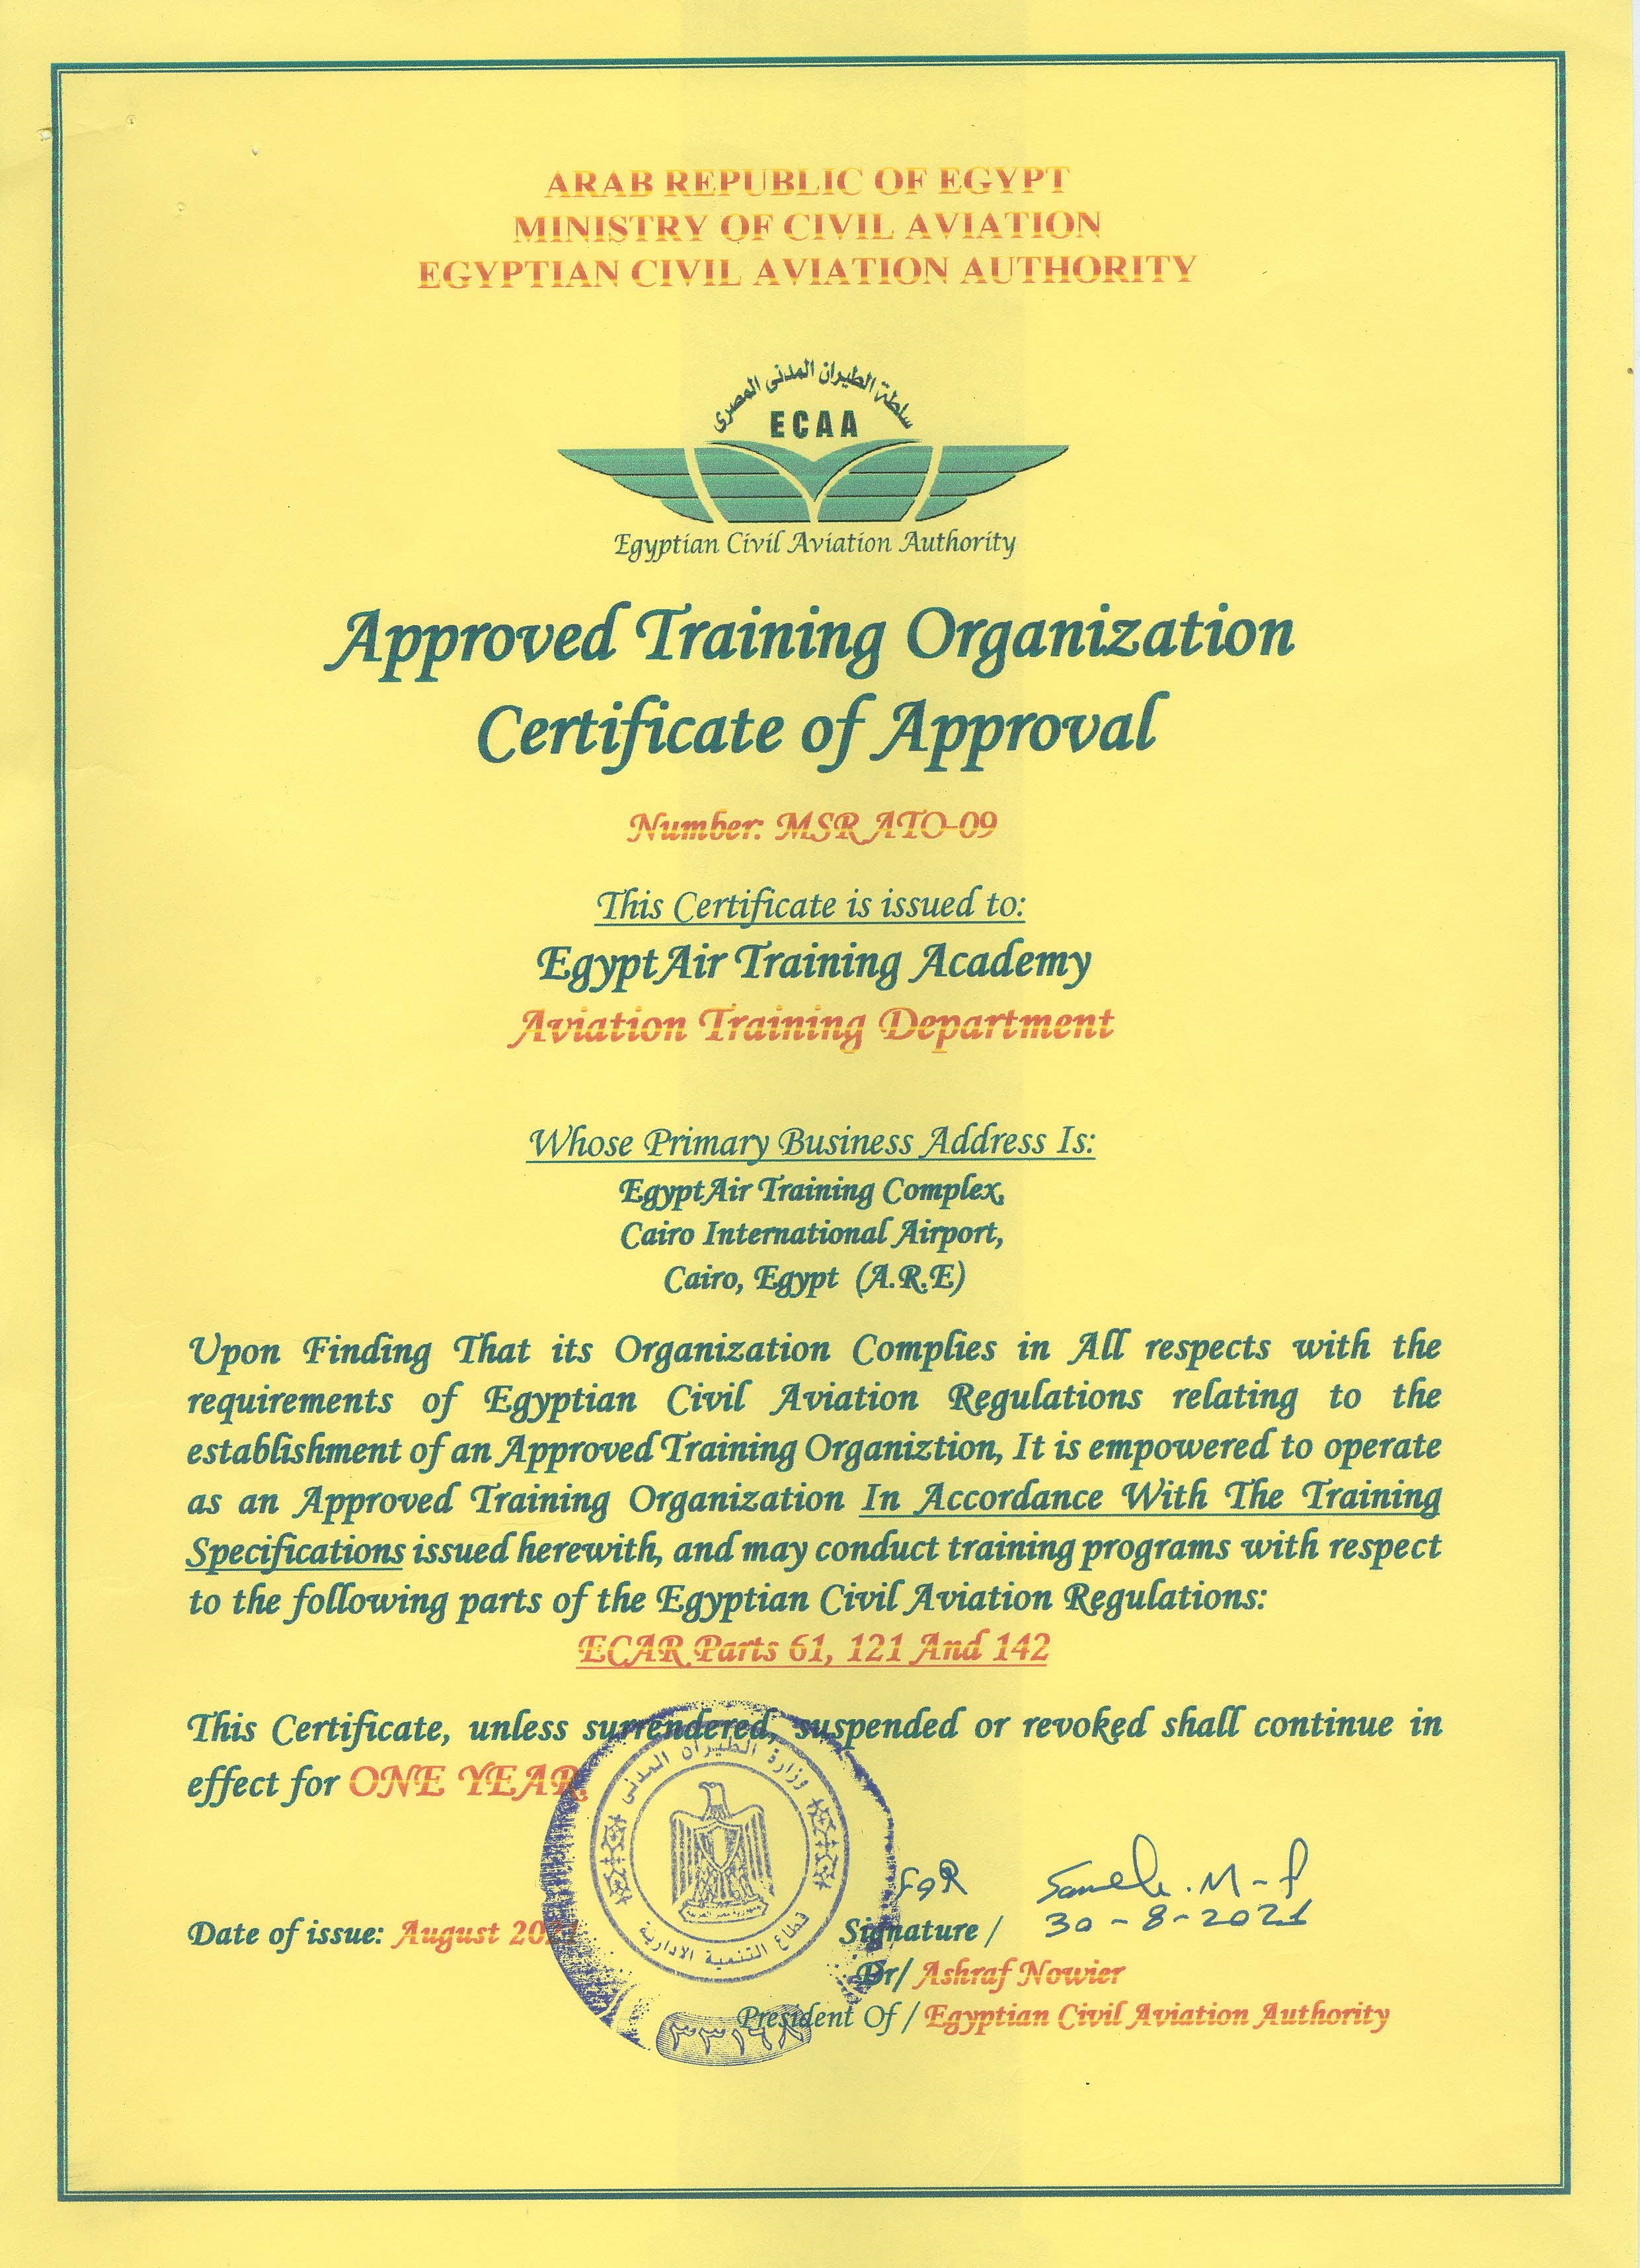 Aviation Training Department